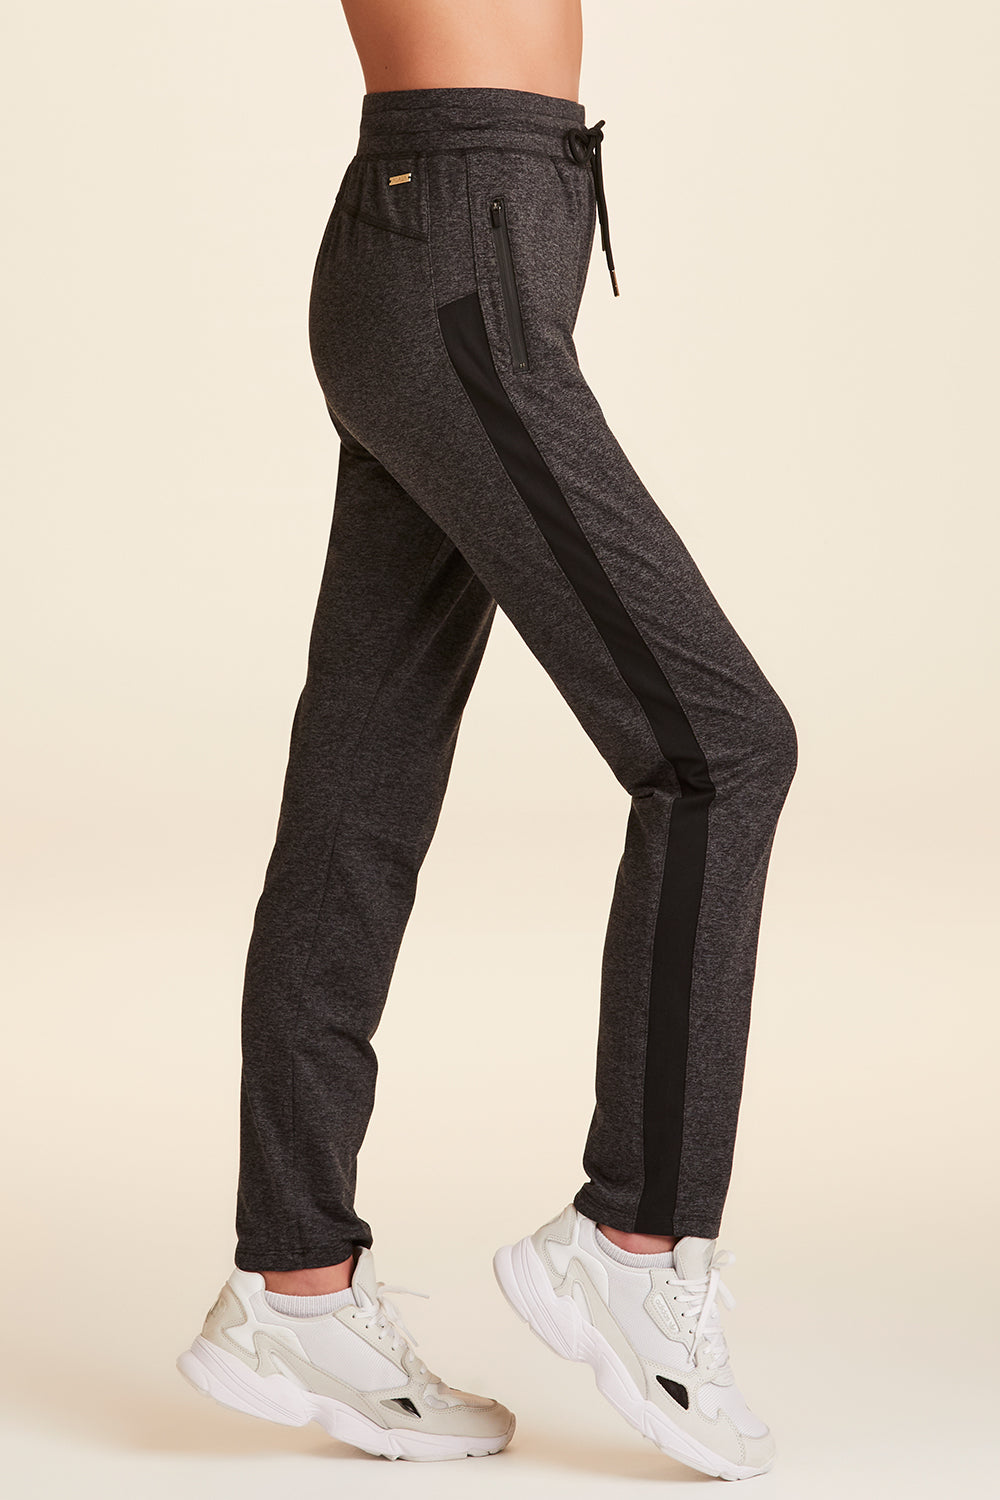 $49 New Balance Leggings Women SMALL GRAY Crop Pockets Active Ladies